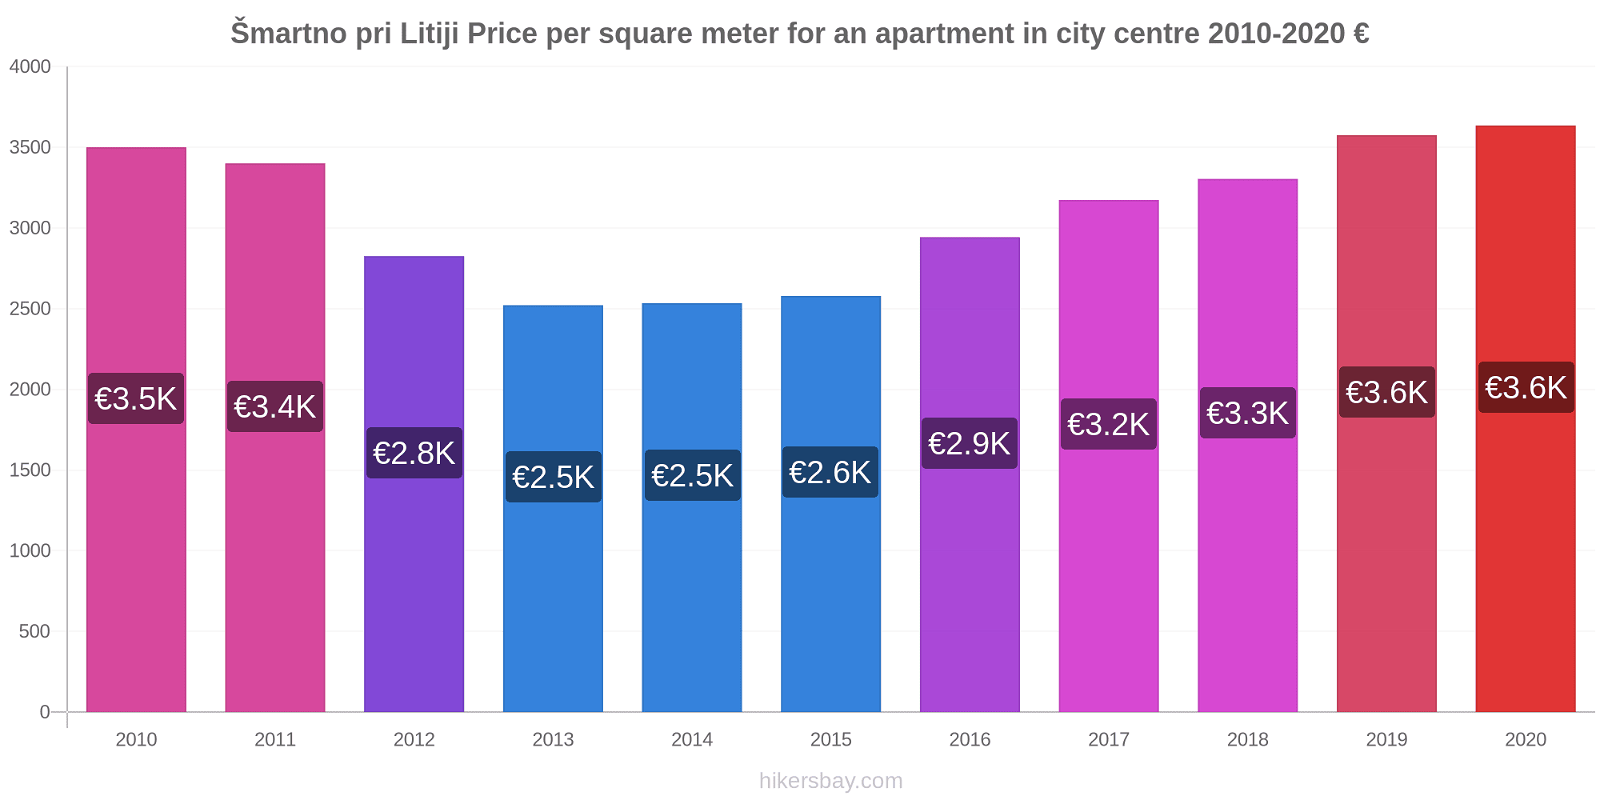 Šmartno pri Litiji price changes Price per square meter for an apartment in city centre hikersbay.com